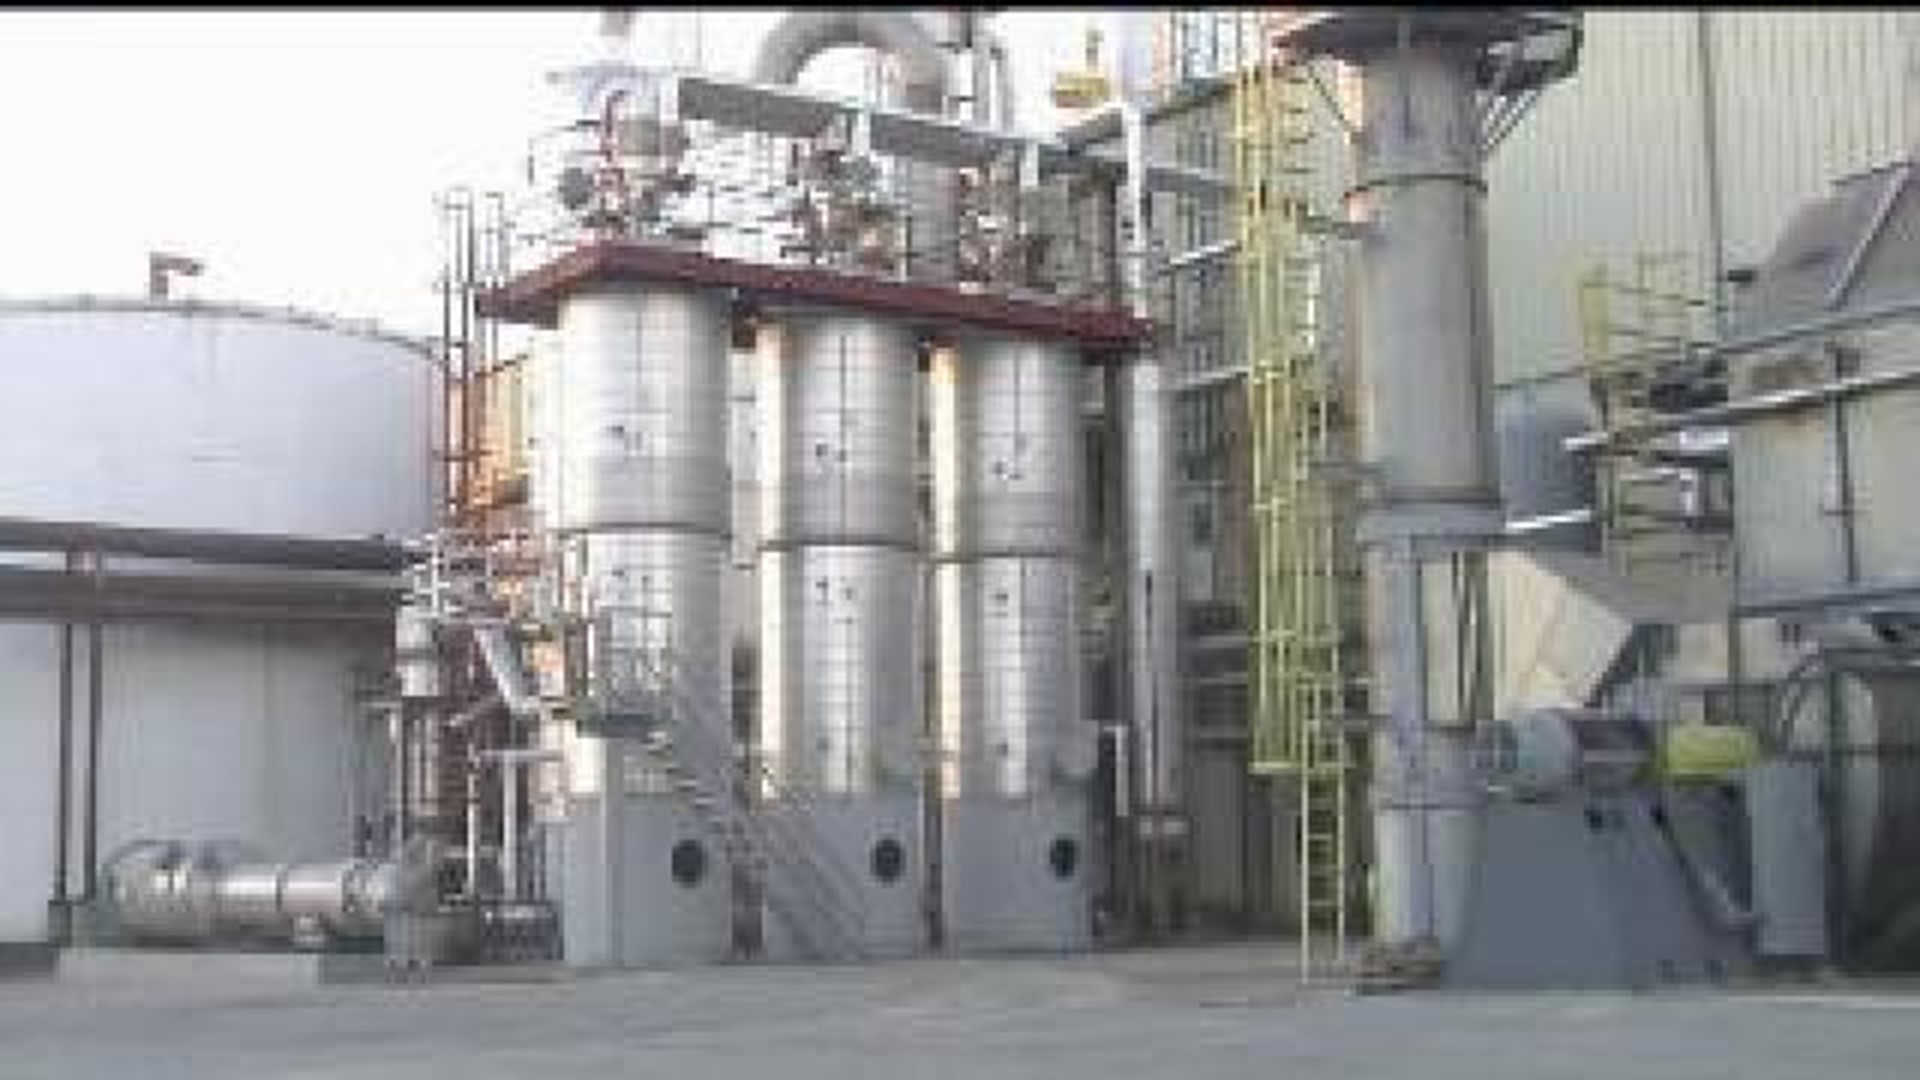 Ethanol production under fire